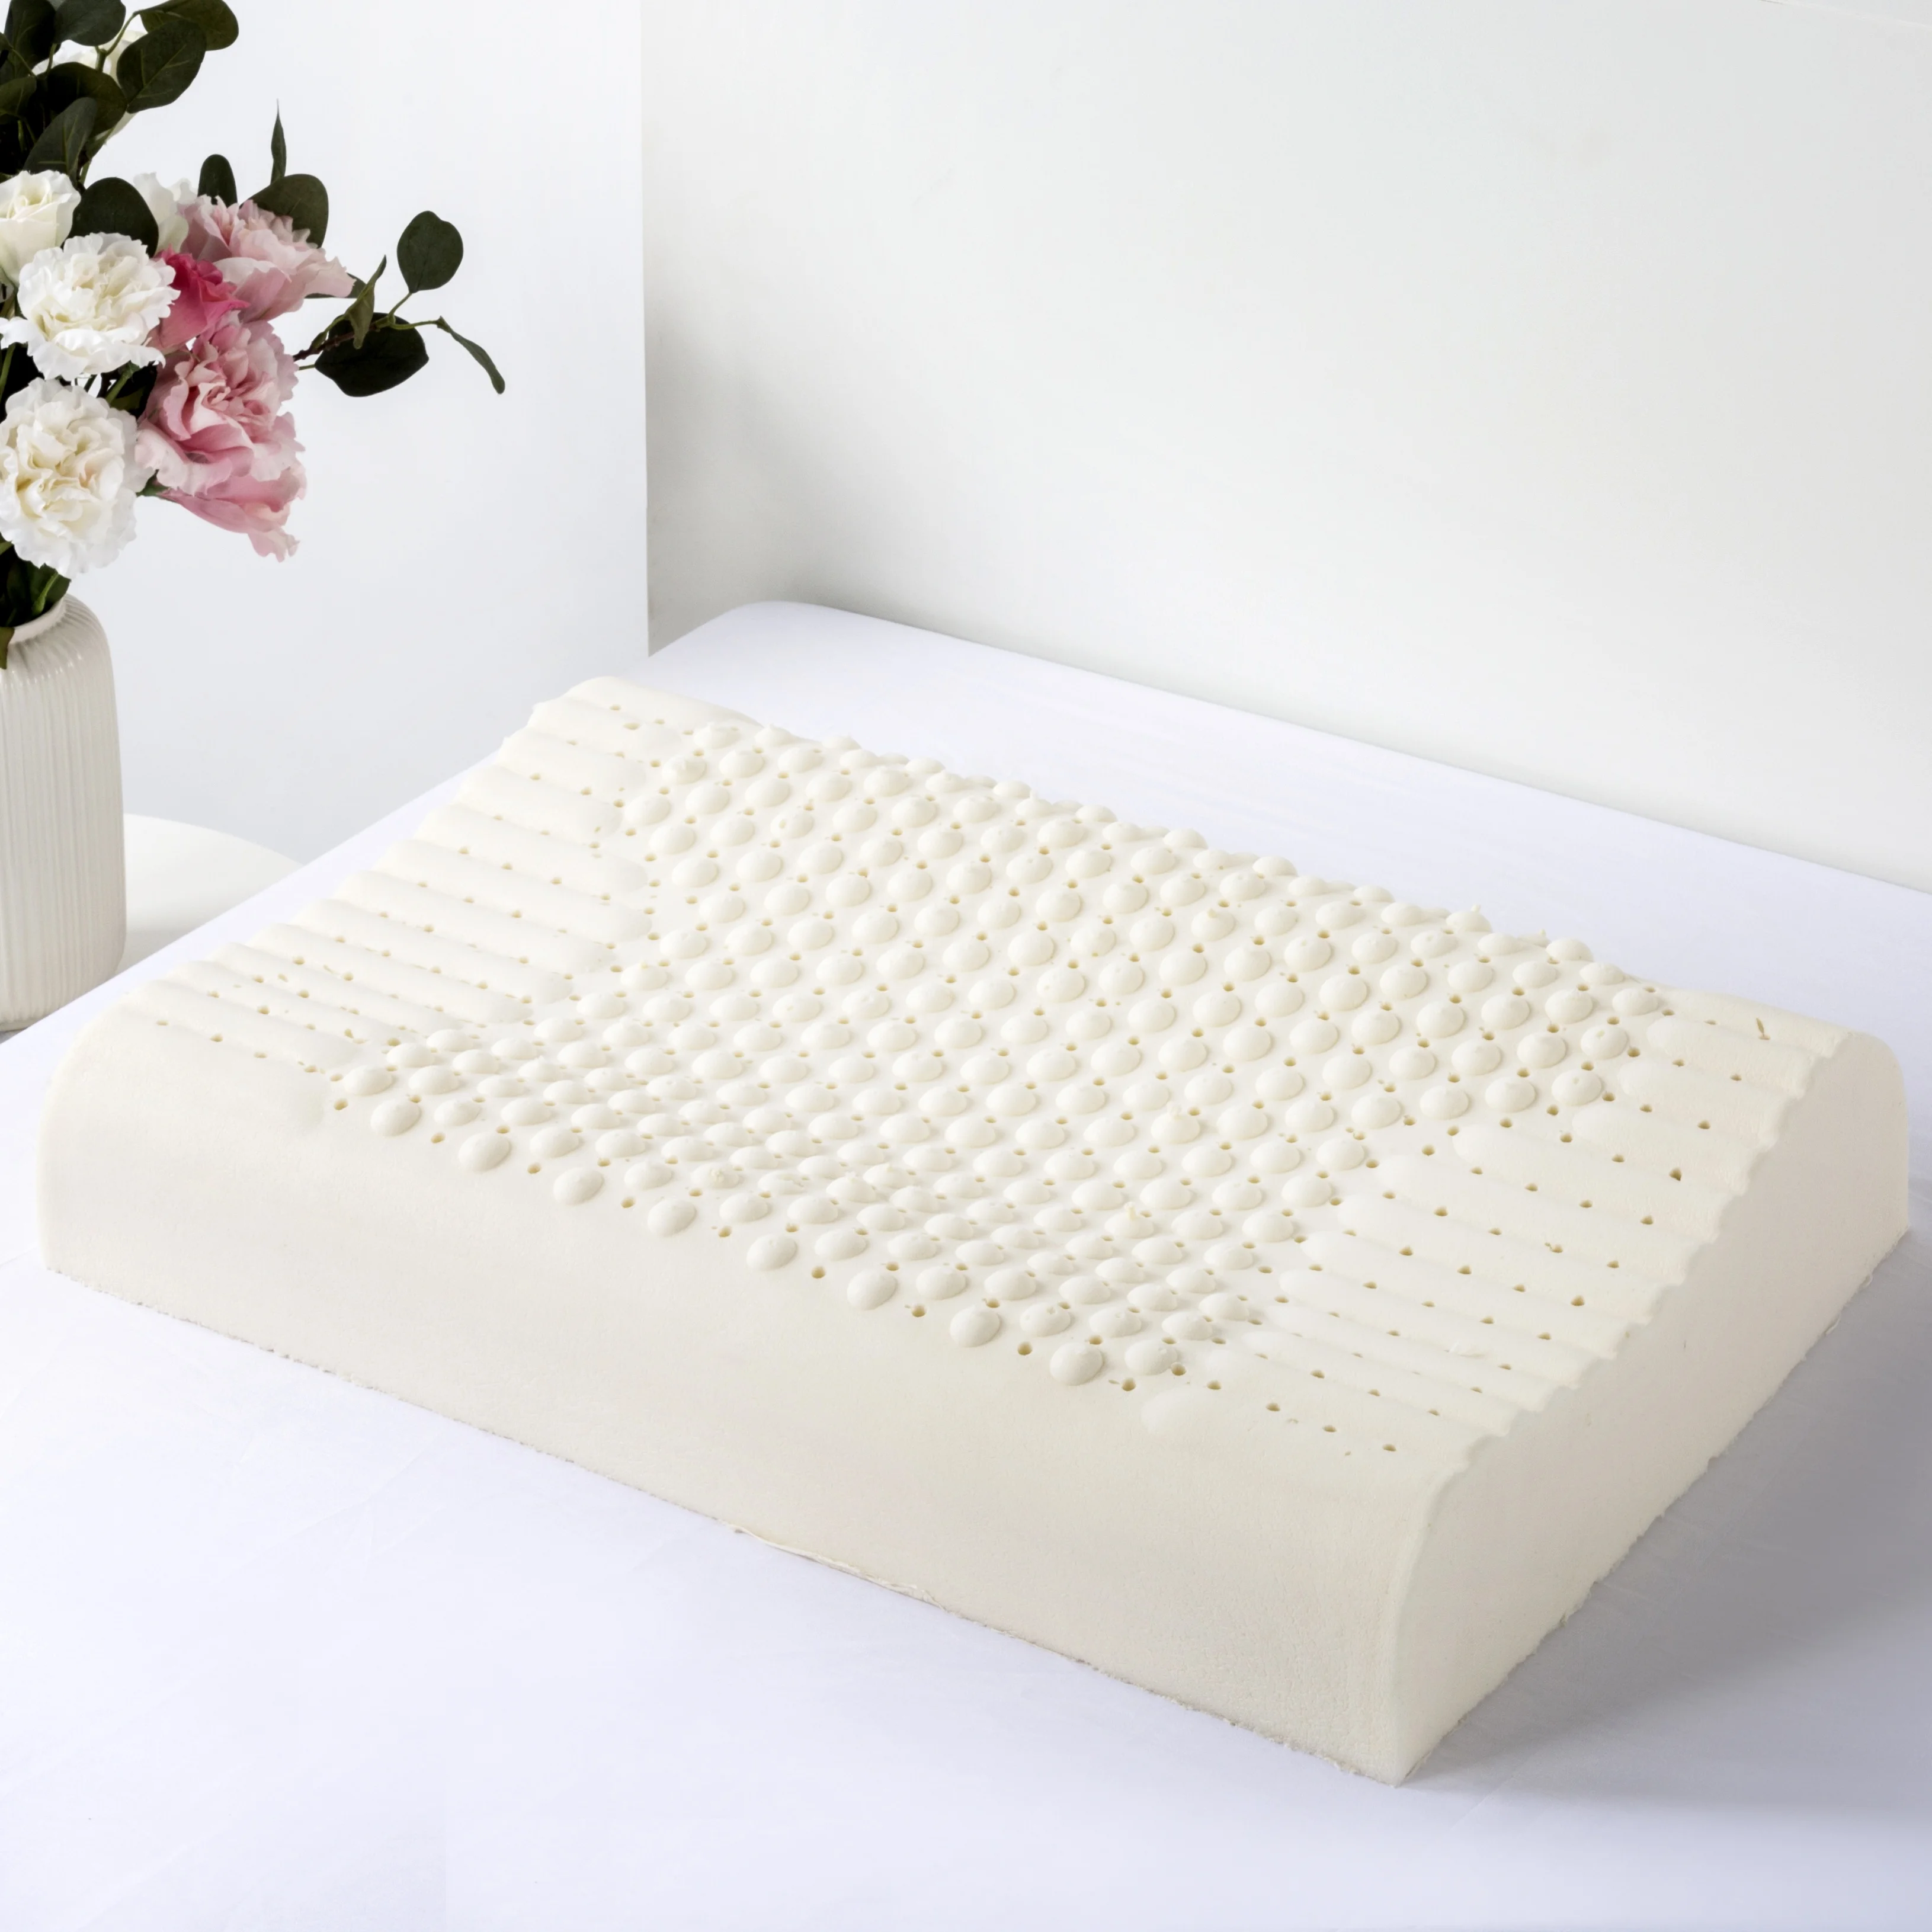 dunlopillo latex foam rubber pillow with